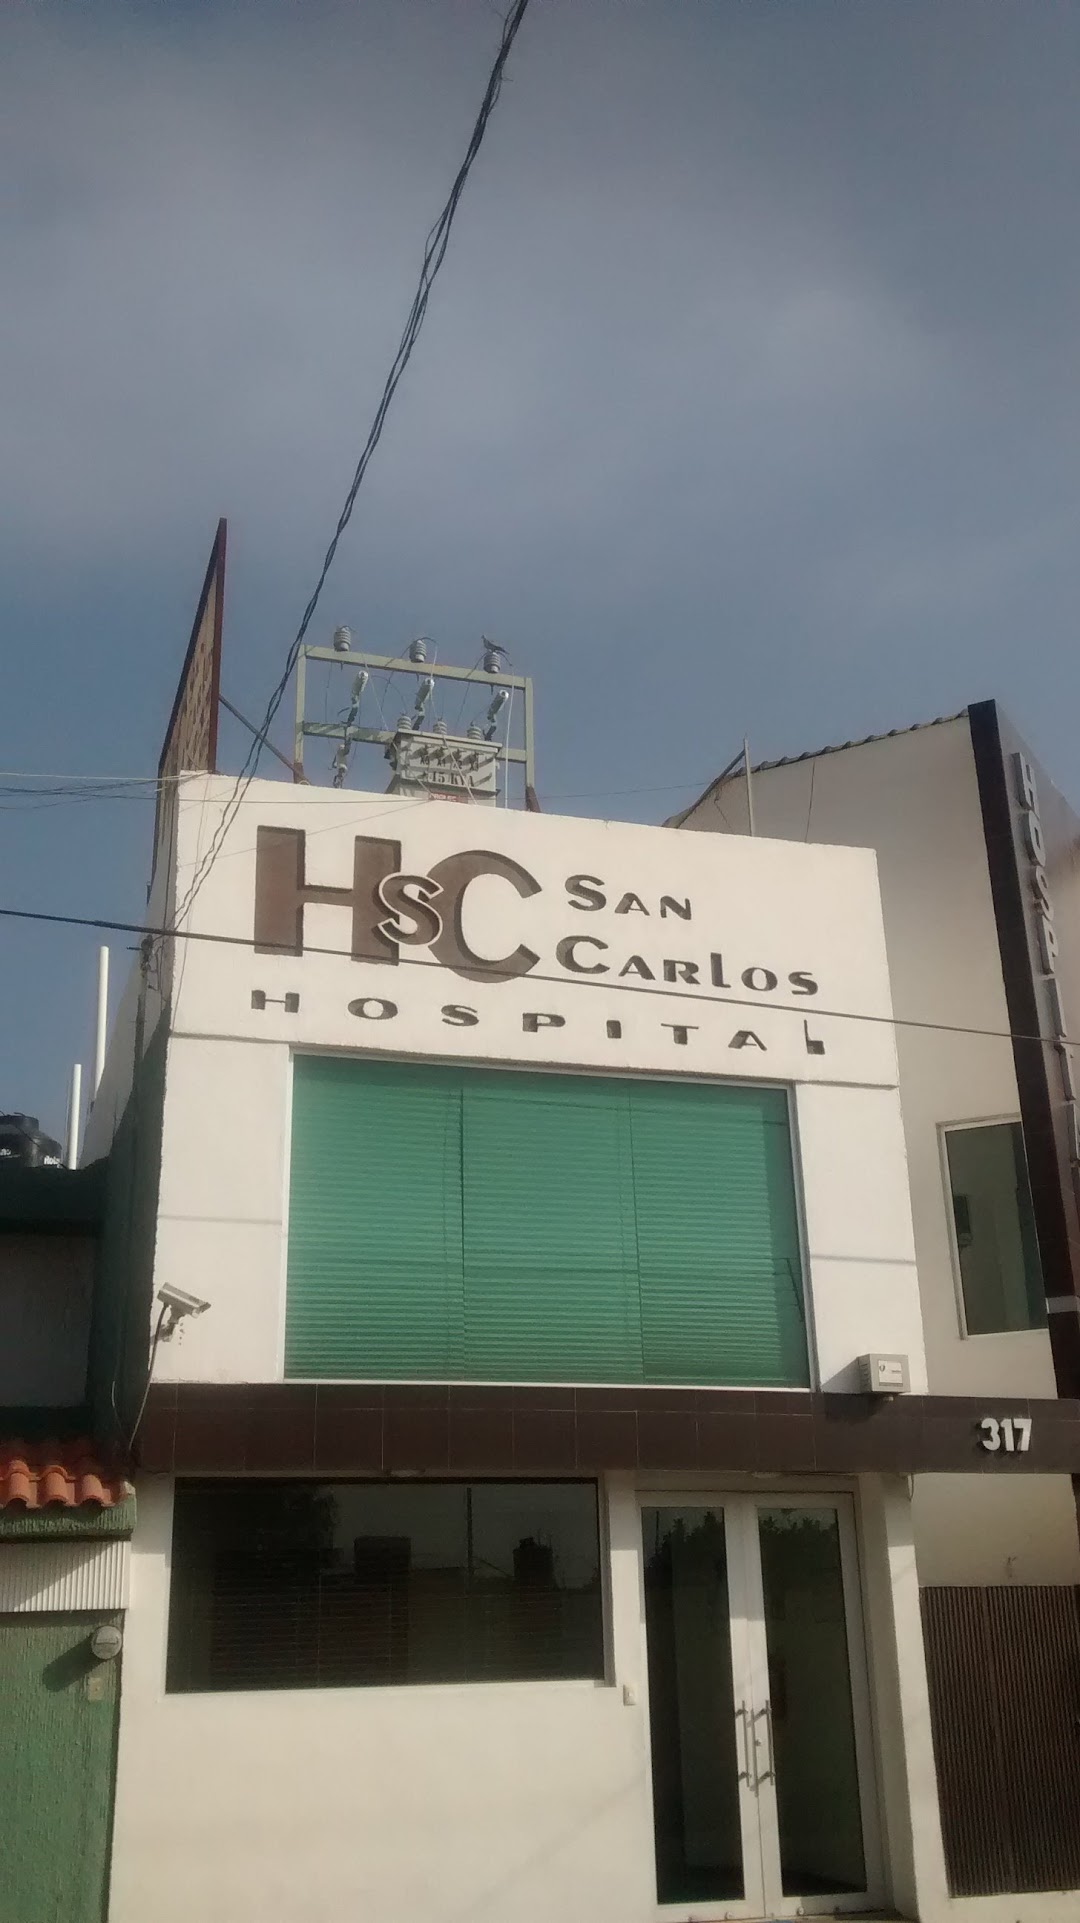 H & C San Carlos